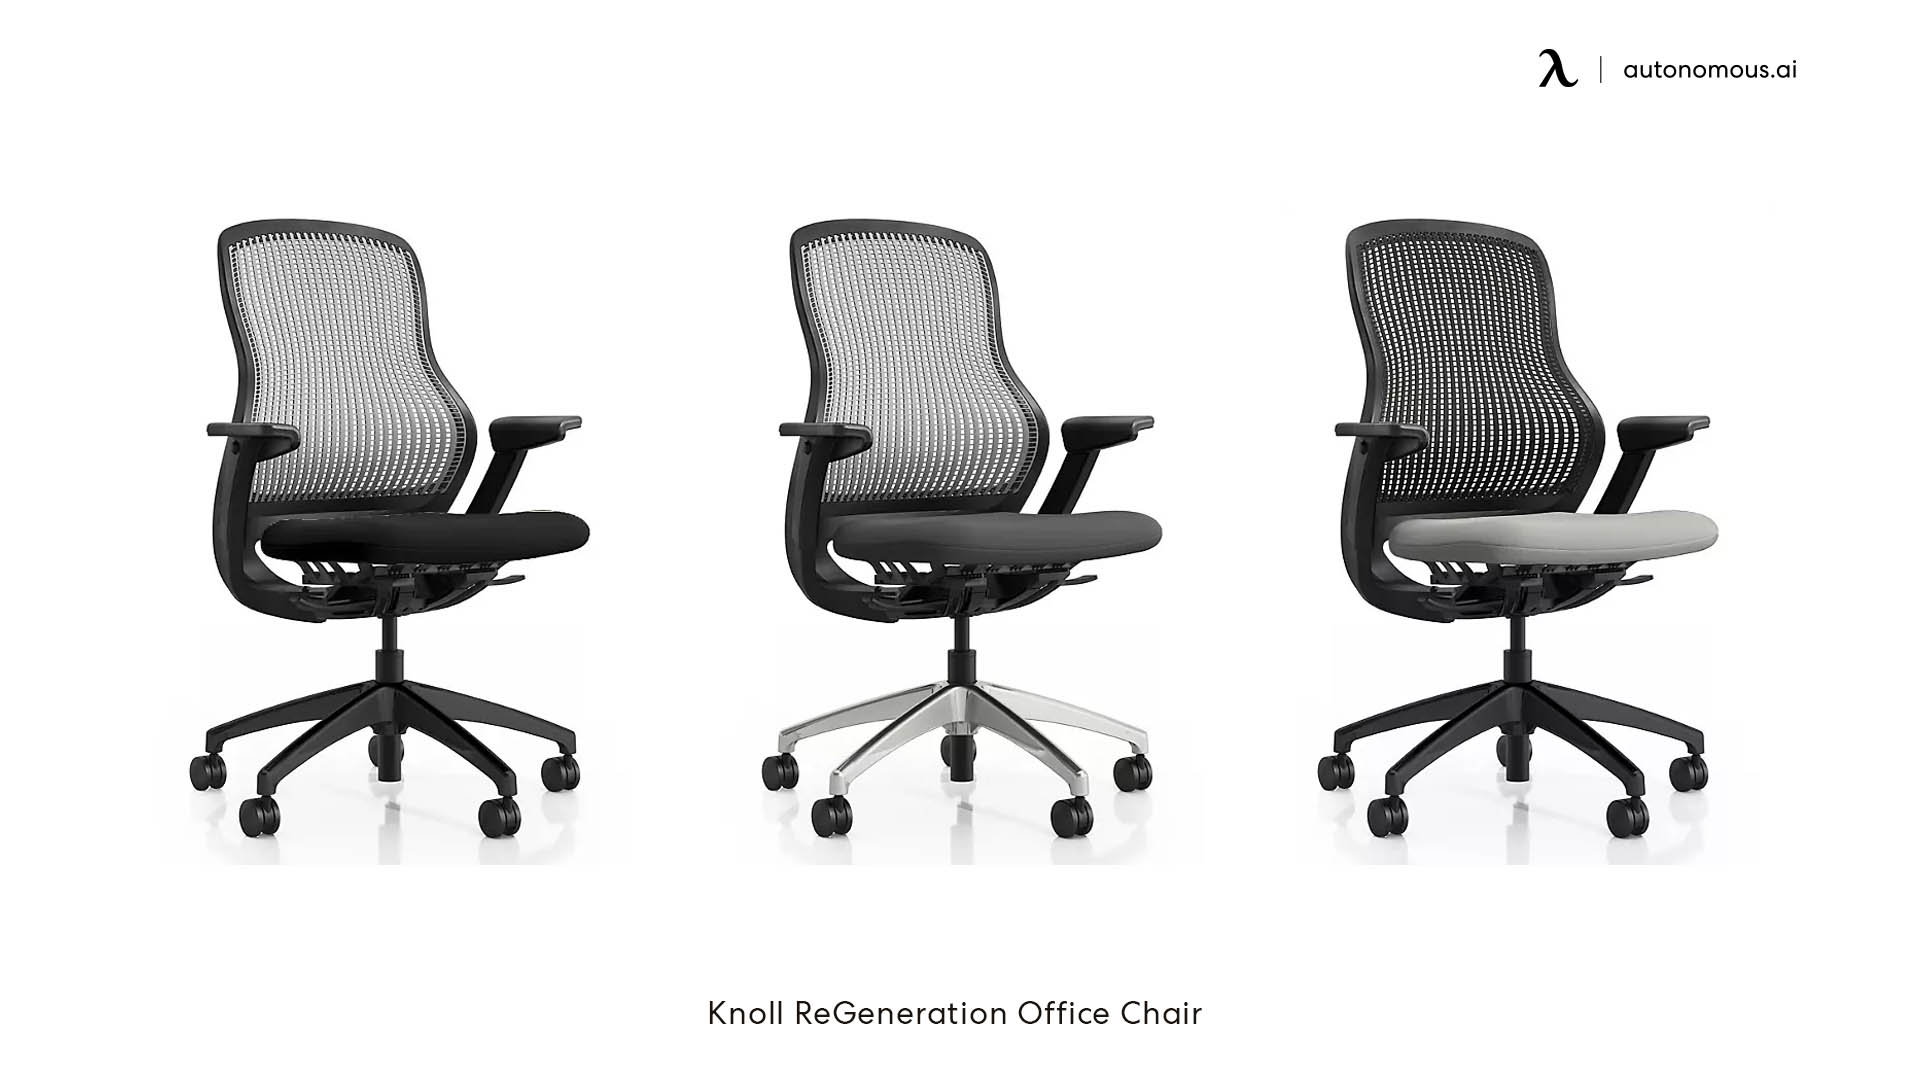 Knoll 12-hour office chair